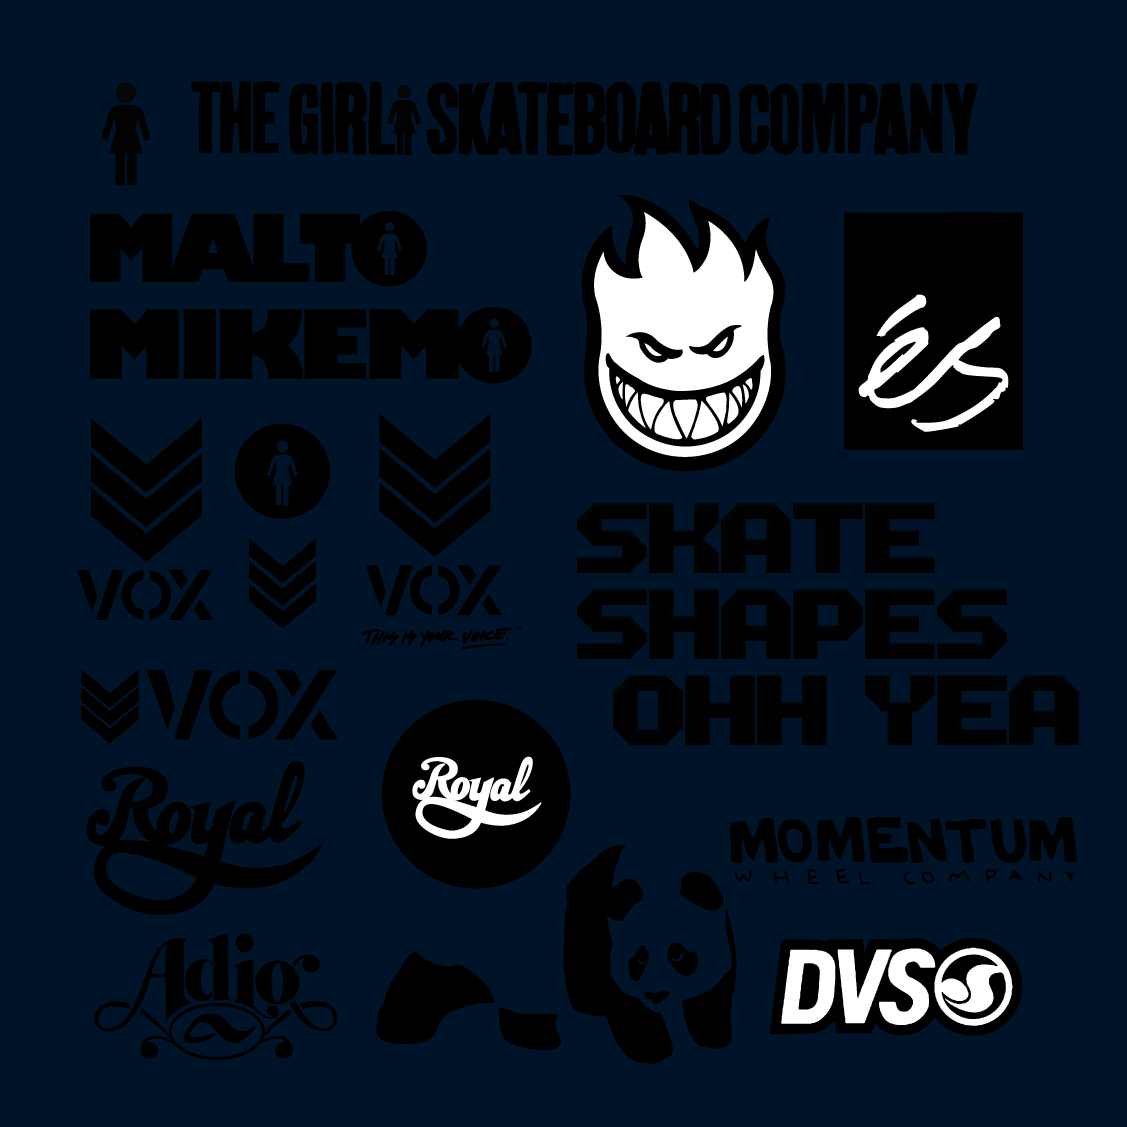 My favorite Skate Logos